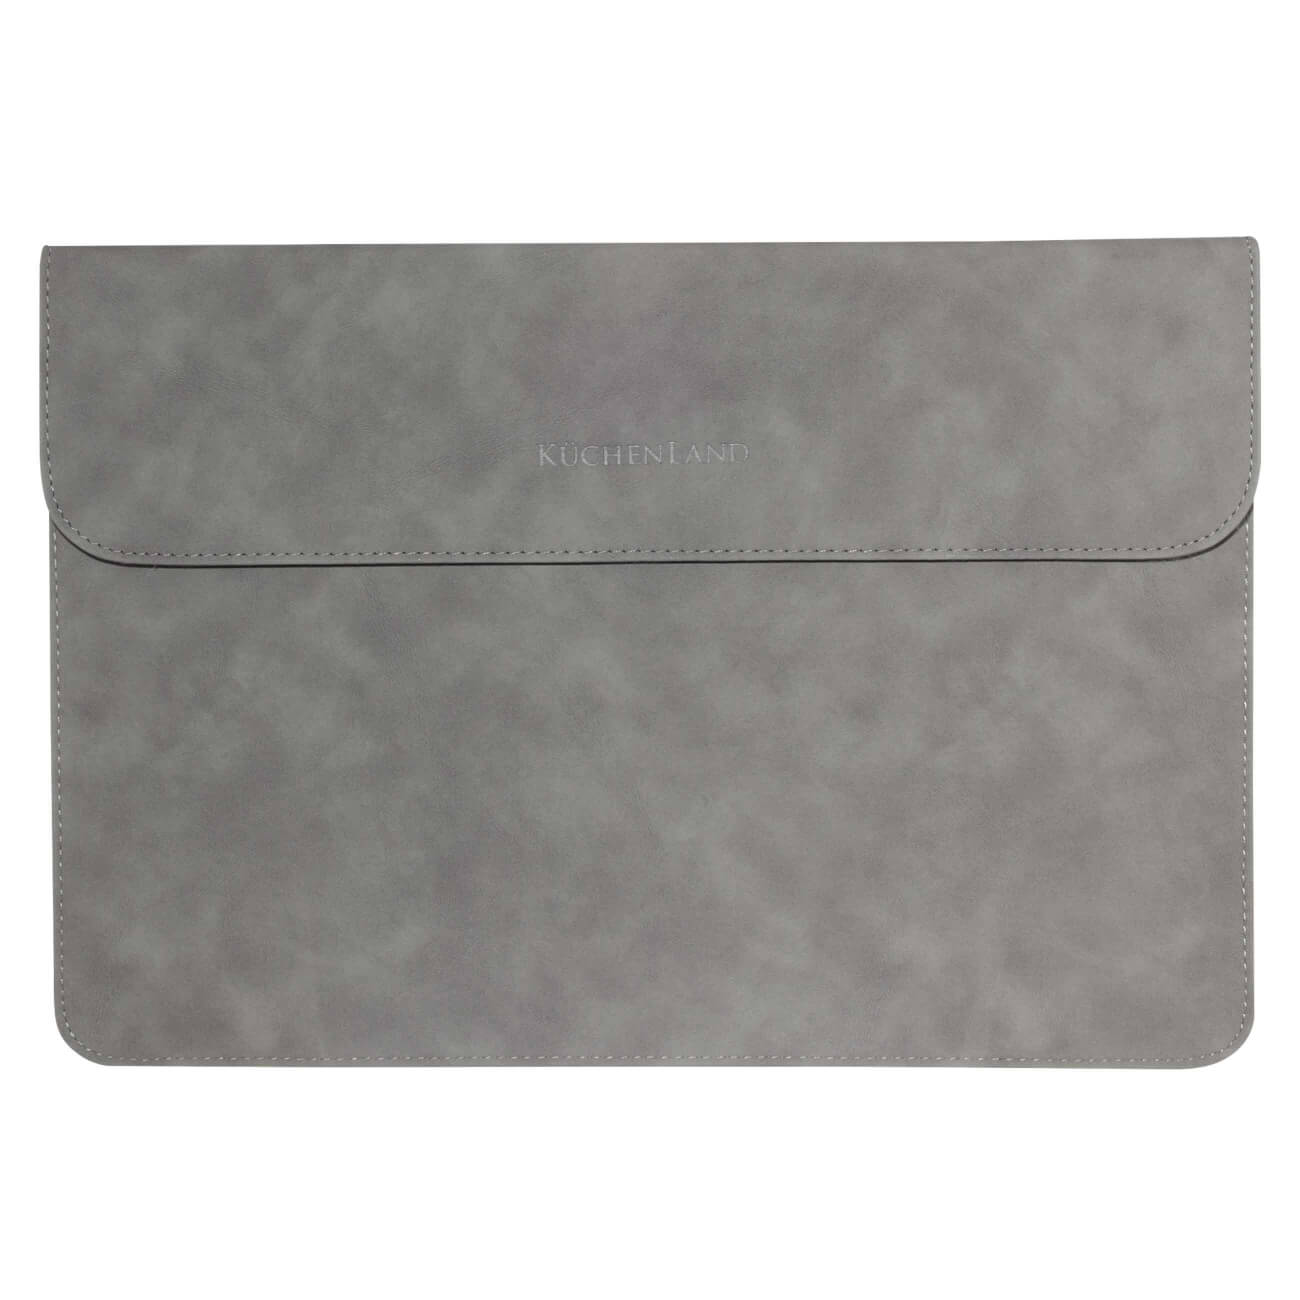 Чехол-конверт для ноутбука, 38х28 см, полиуретан, серый, Krast